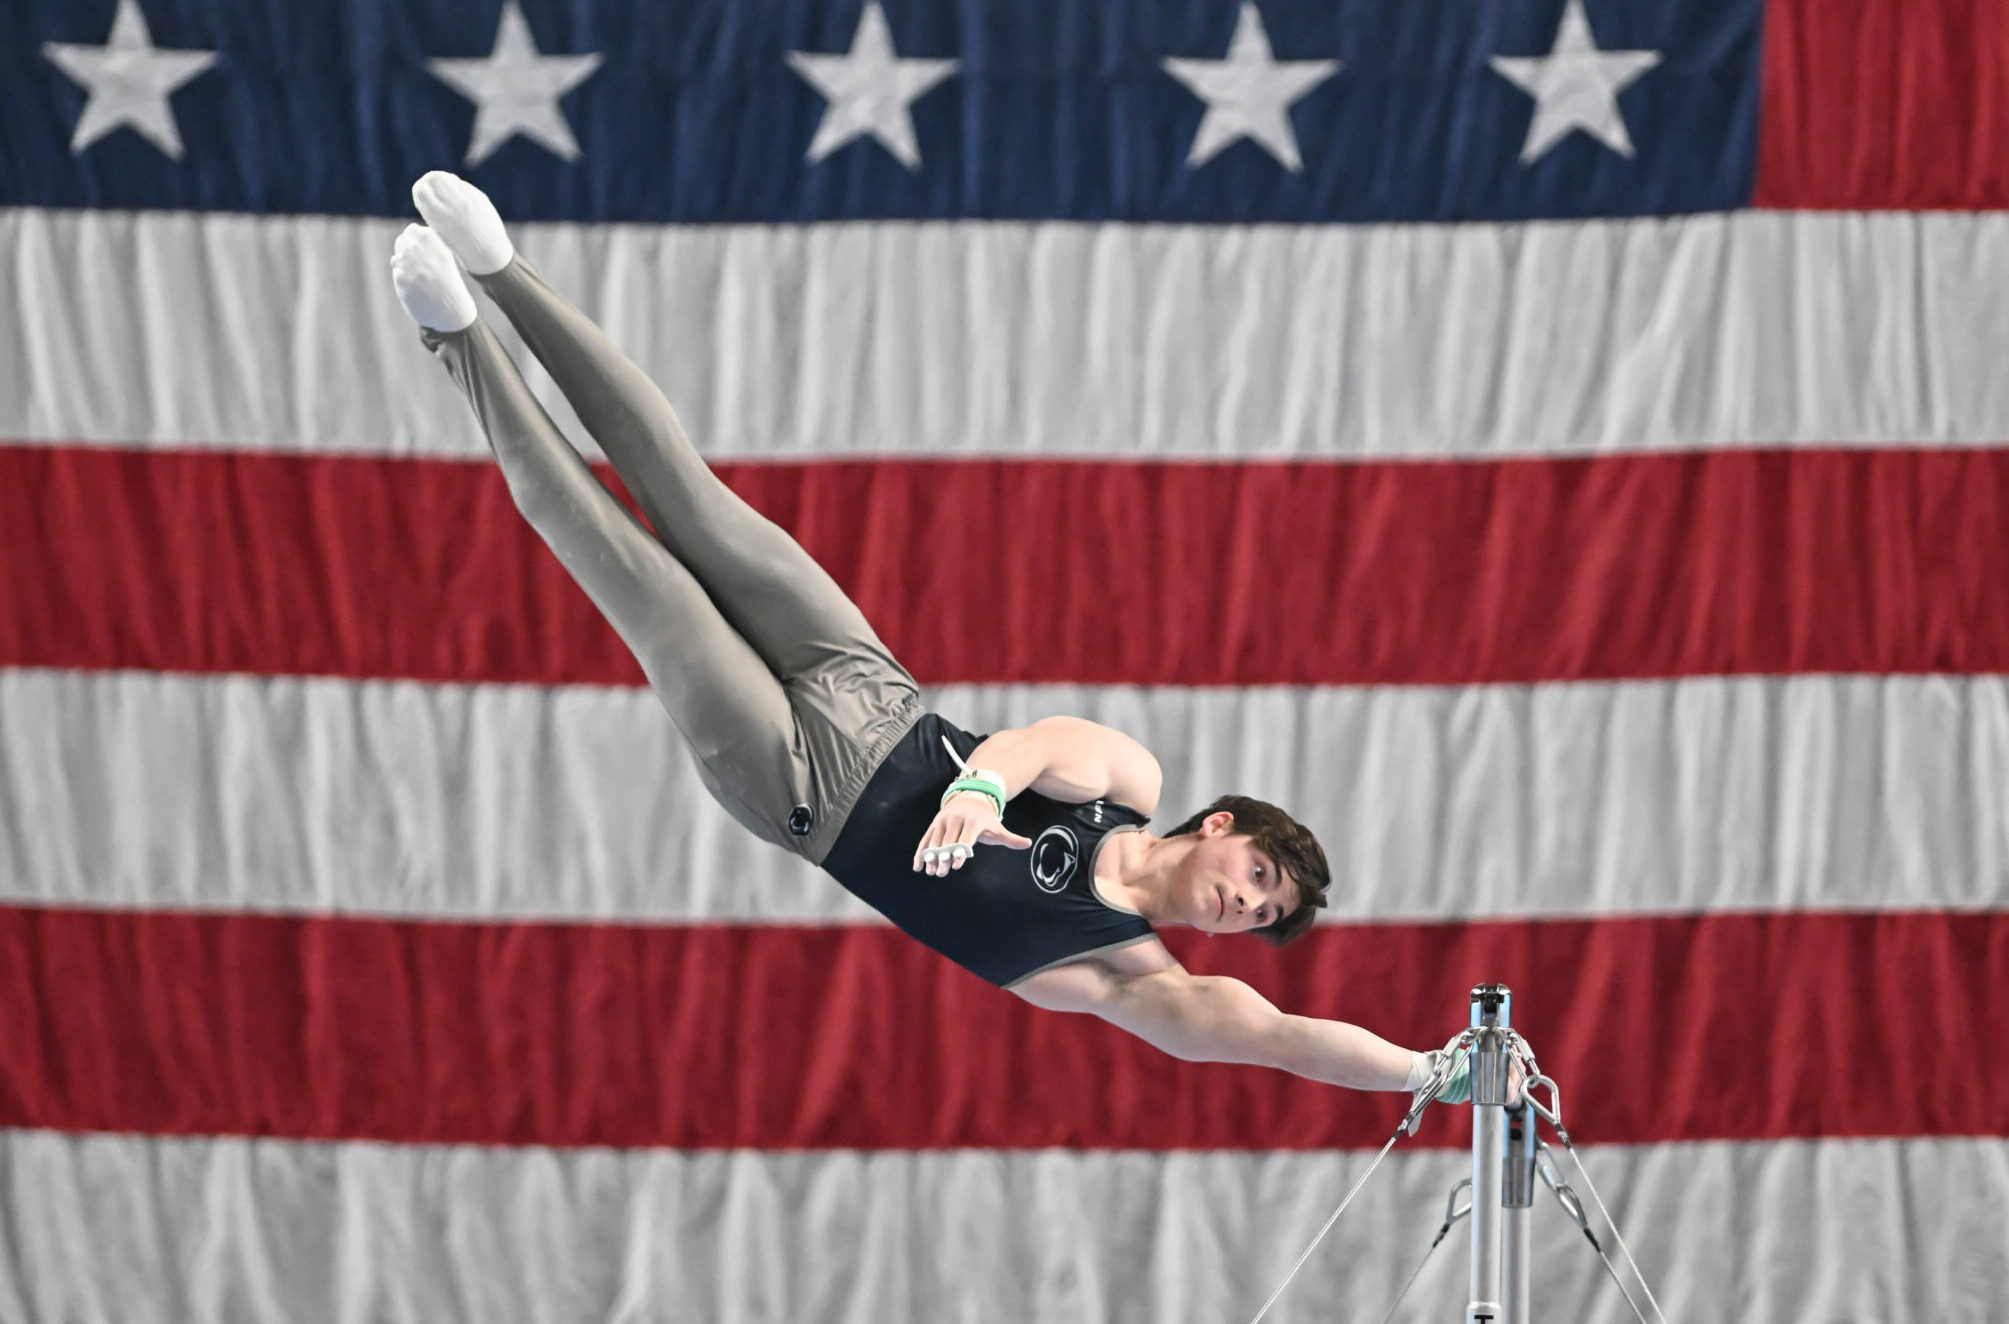 Gymnastics Training Straps - American Gymnast and Ninja